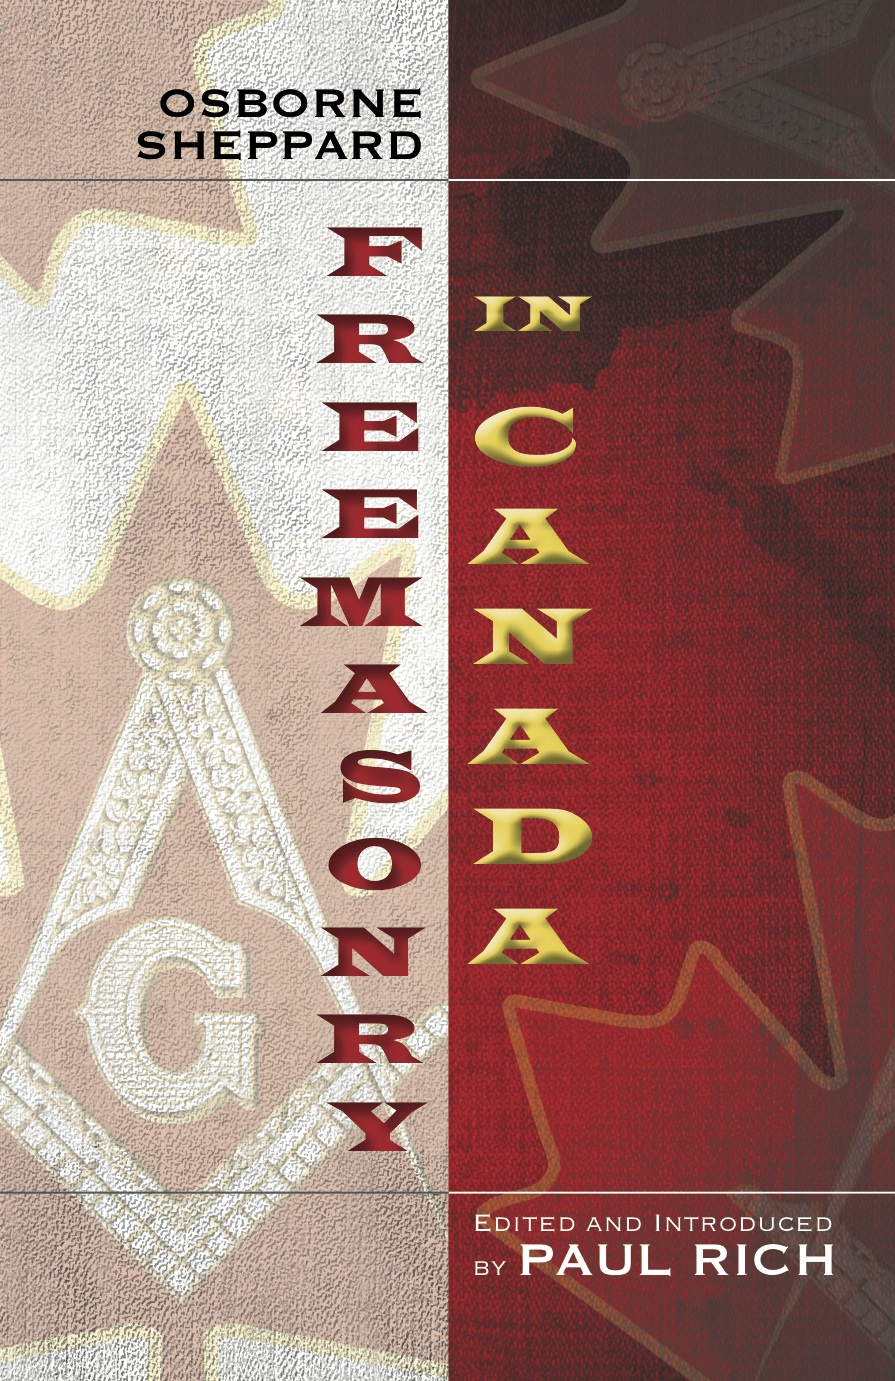 Freemasonry in Canada